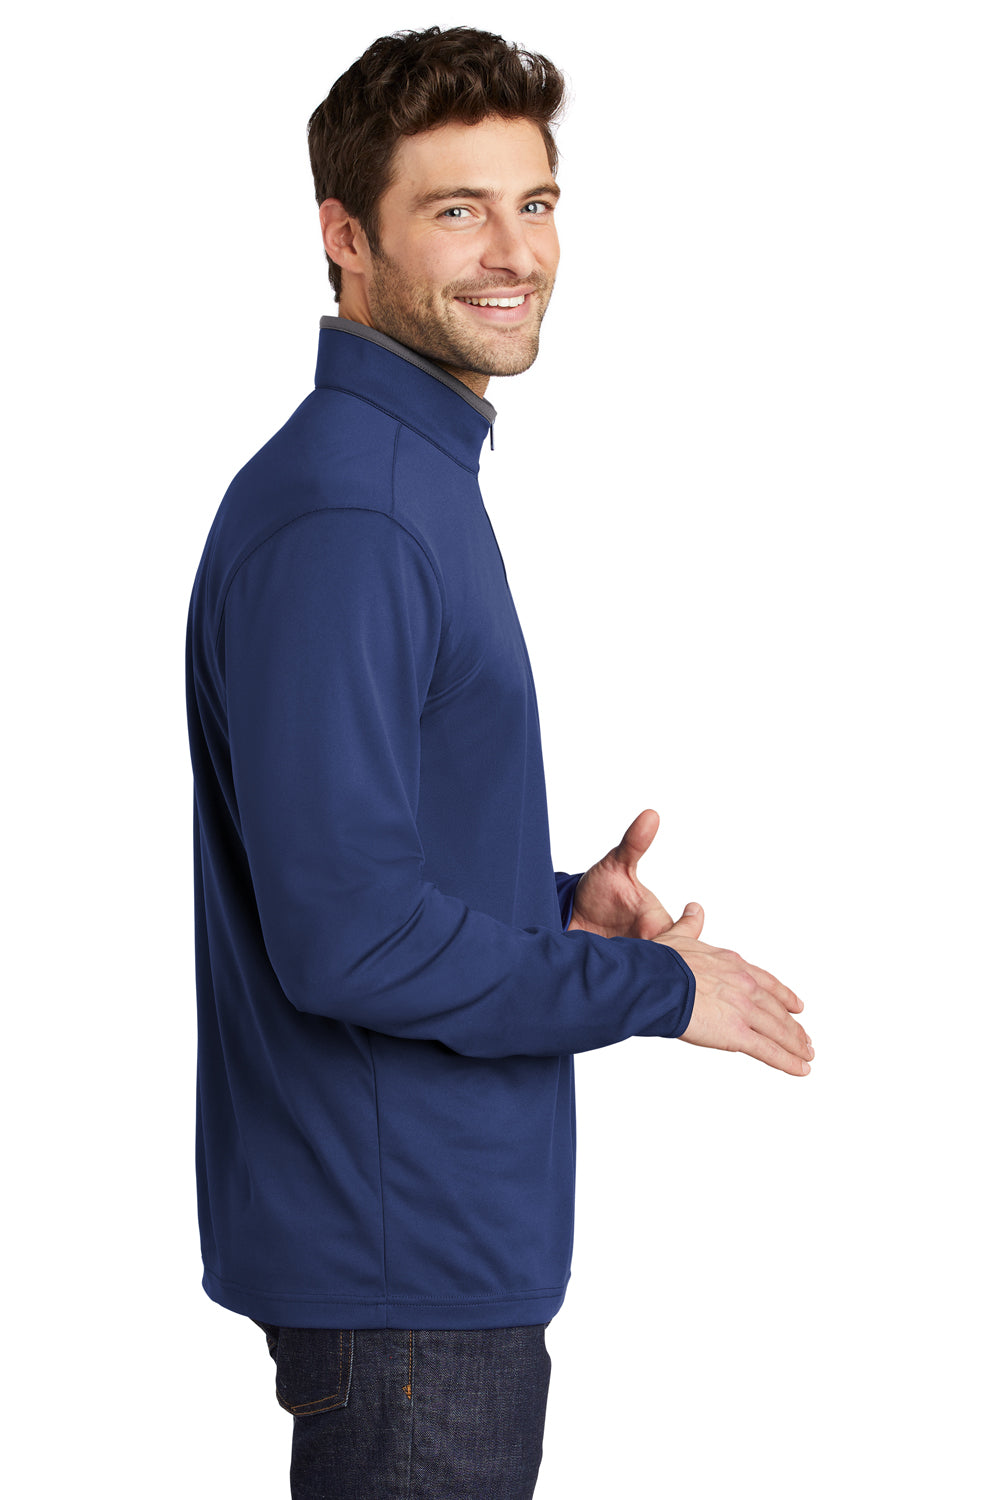 Port Authority Mens Performance Silk Touch 1/4 Zip Sweatshirt Royal Blue/Steel Grey Side